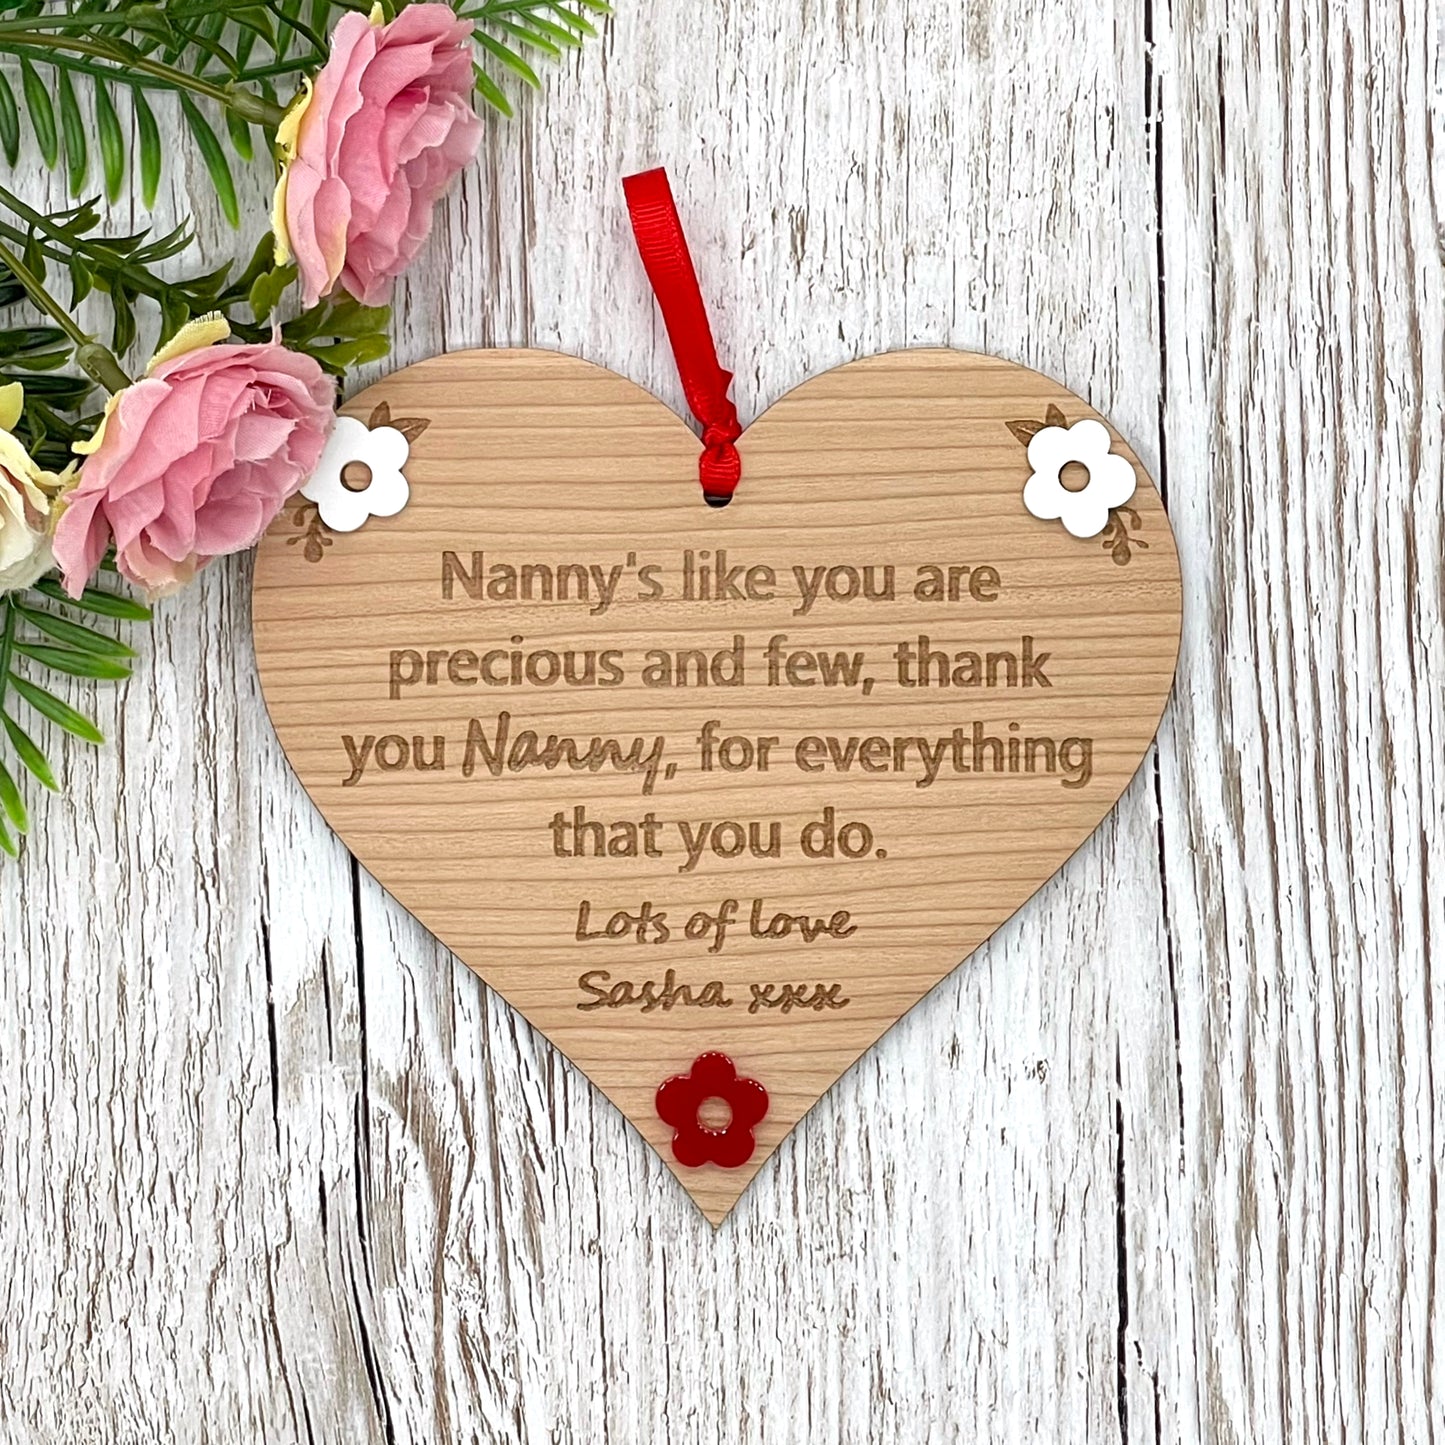 Nana Grandma Personalised Heart Gift | Nanny Like You Heart Plaque